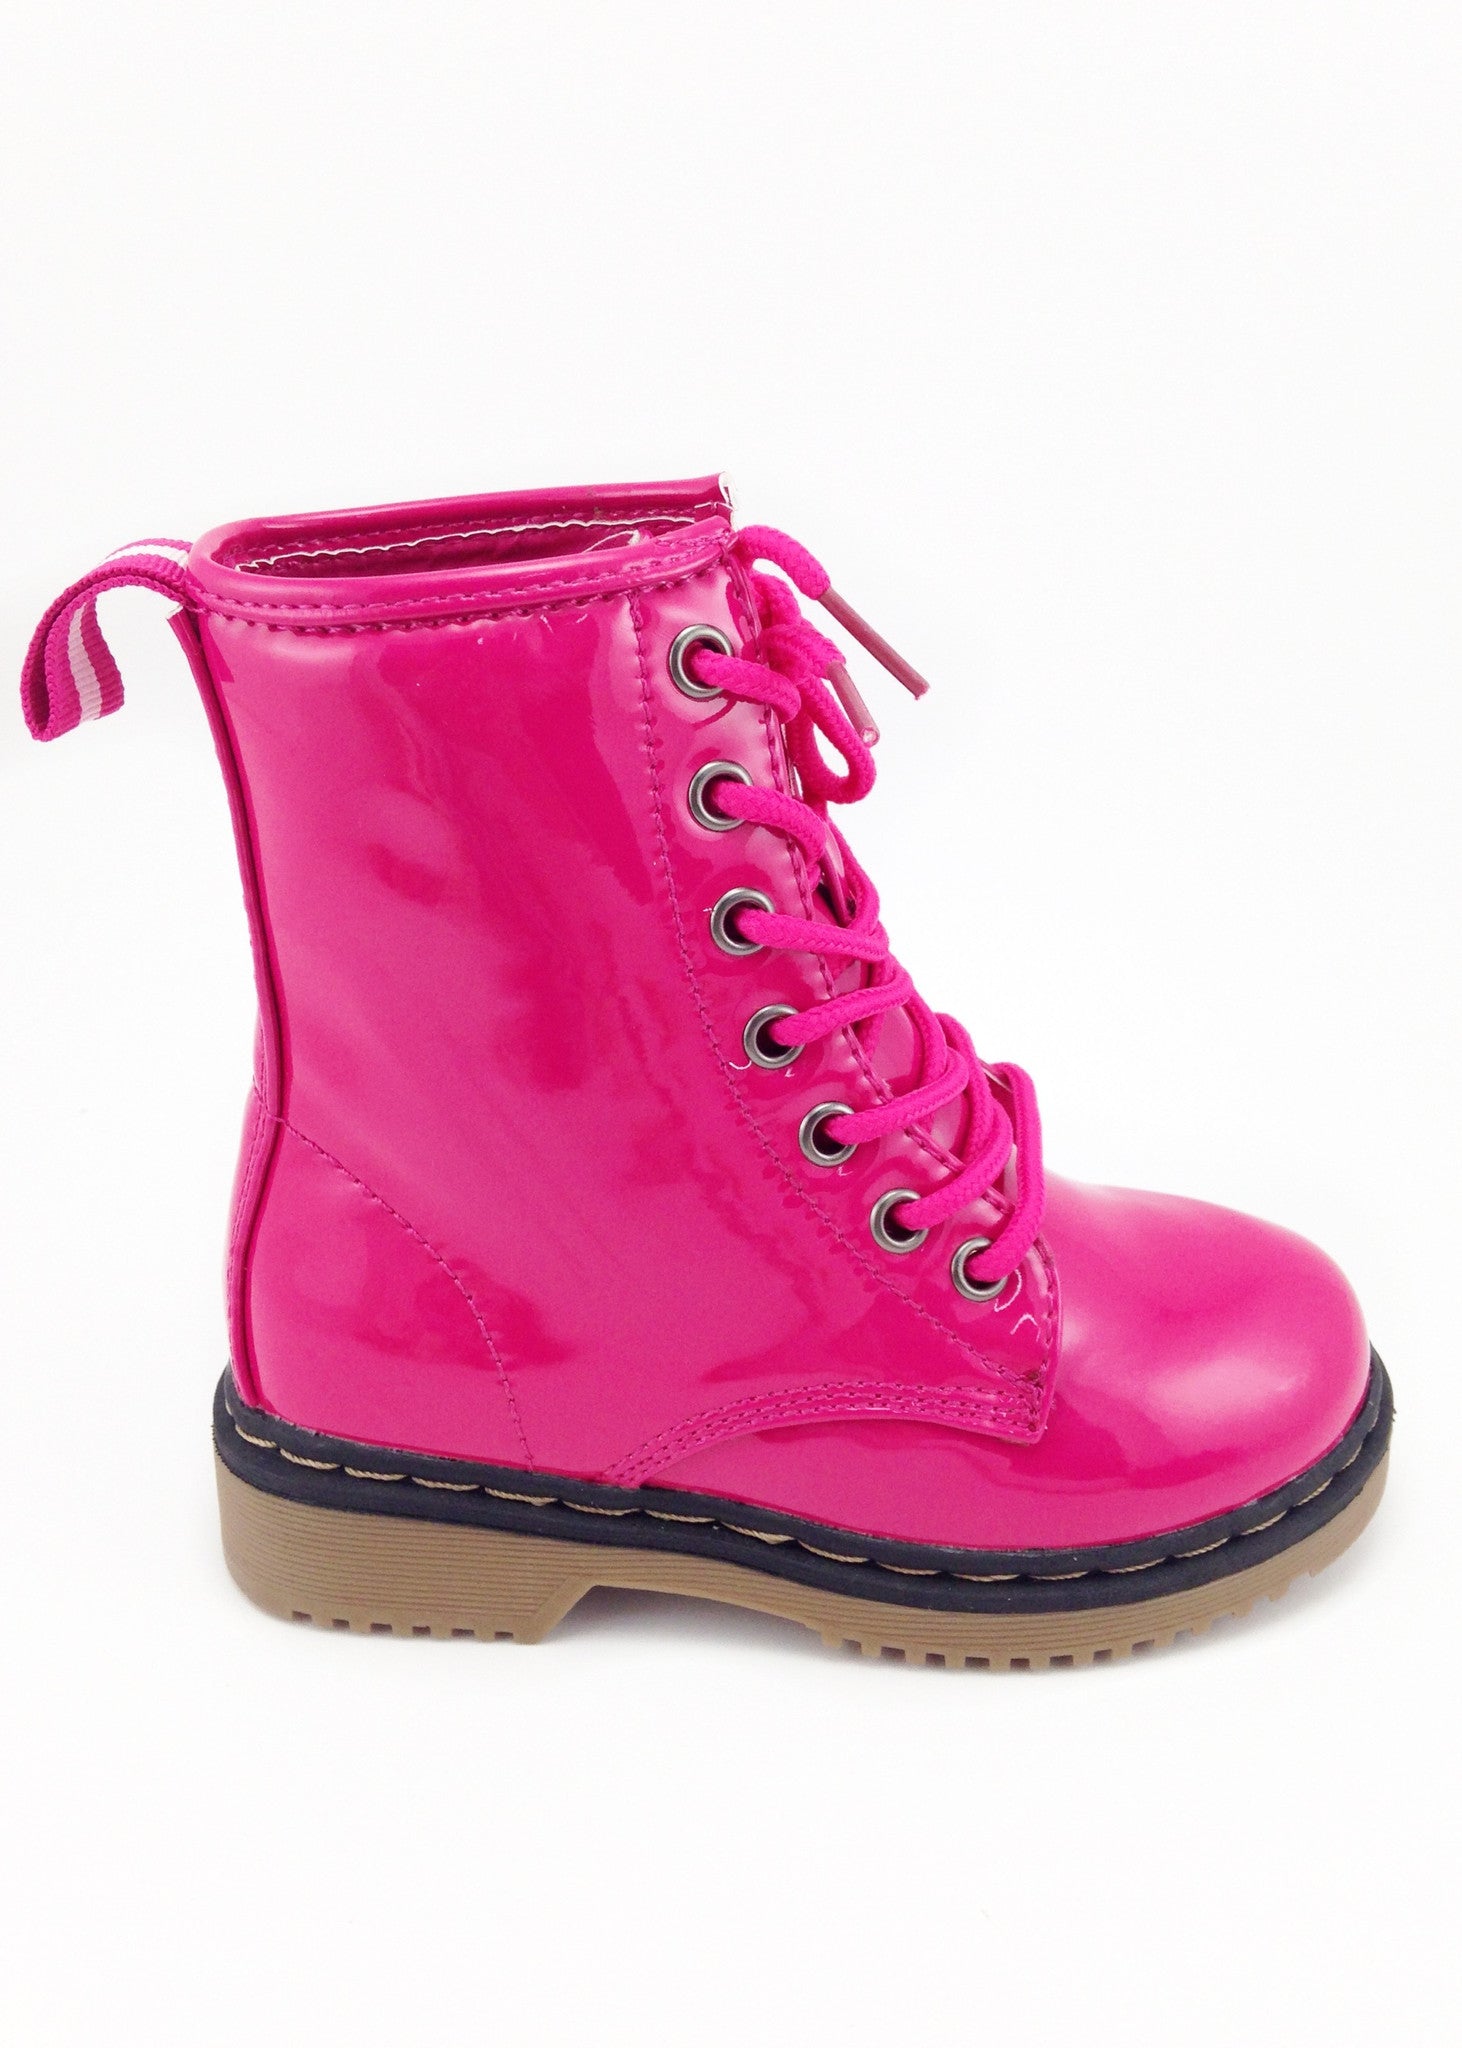 girls pink boots